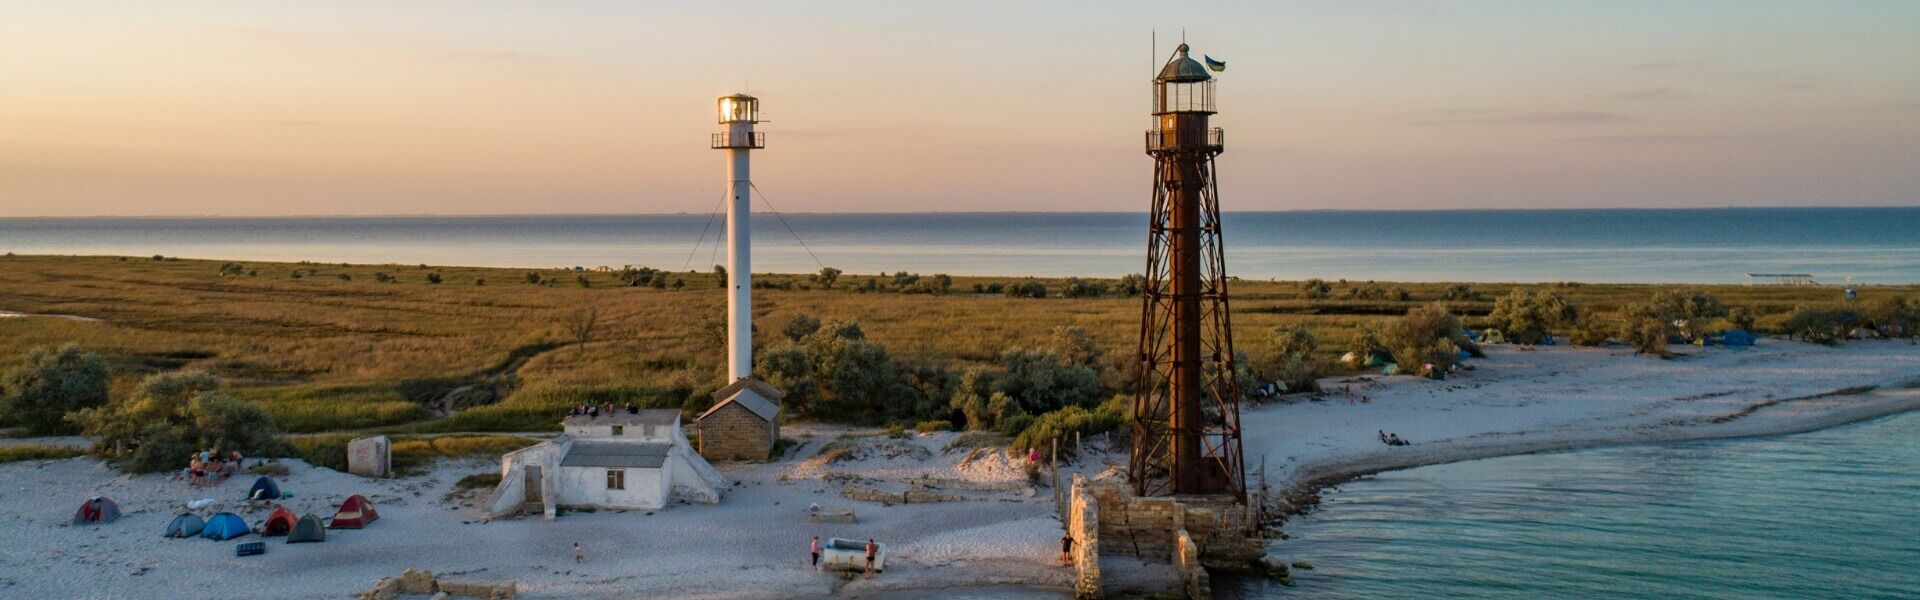 Dzharylhach lighthouse